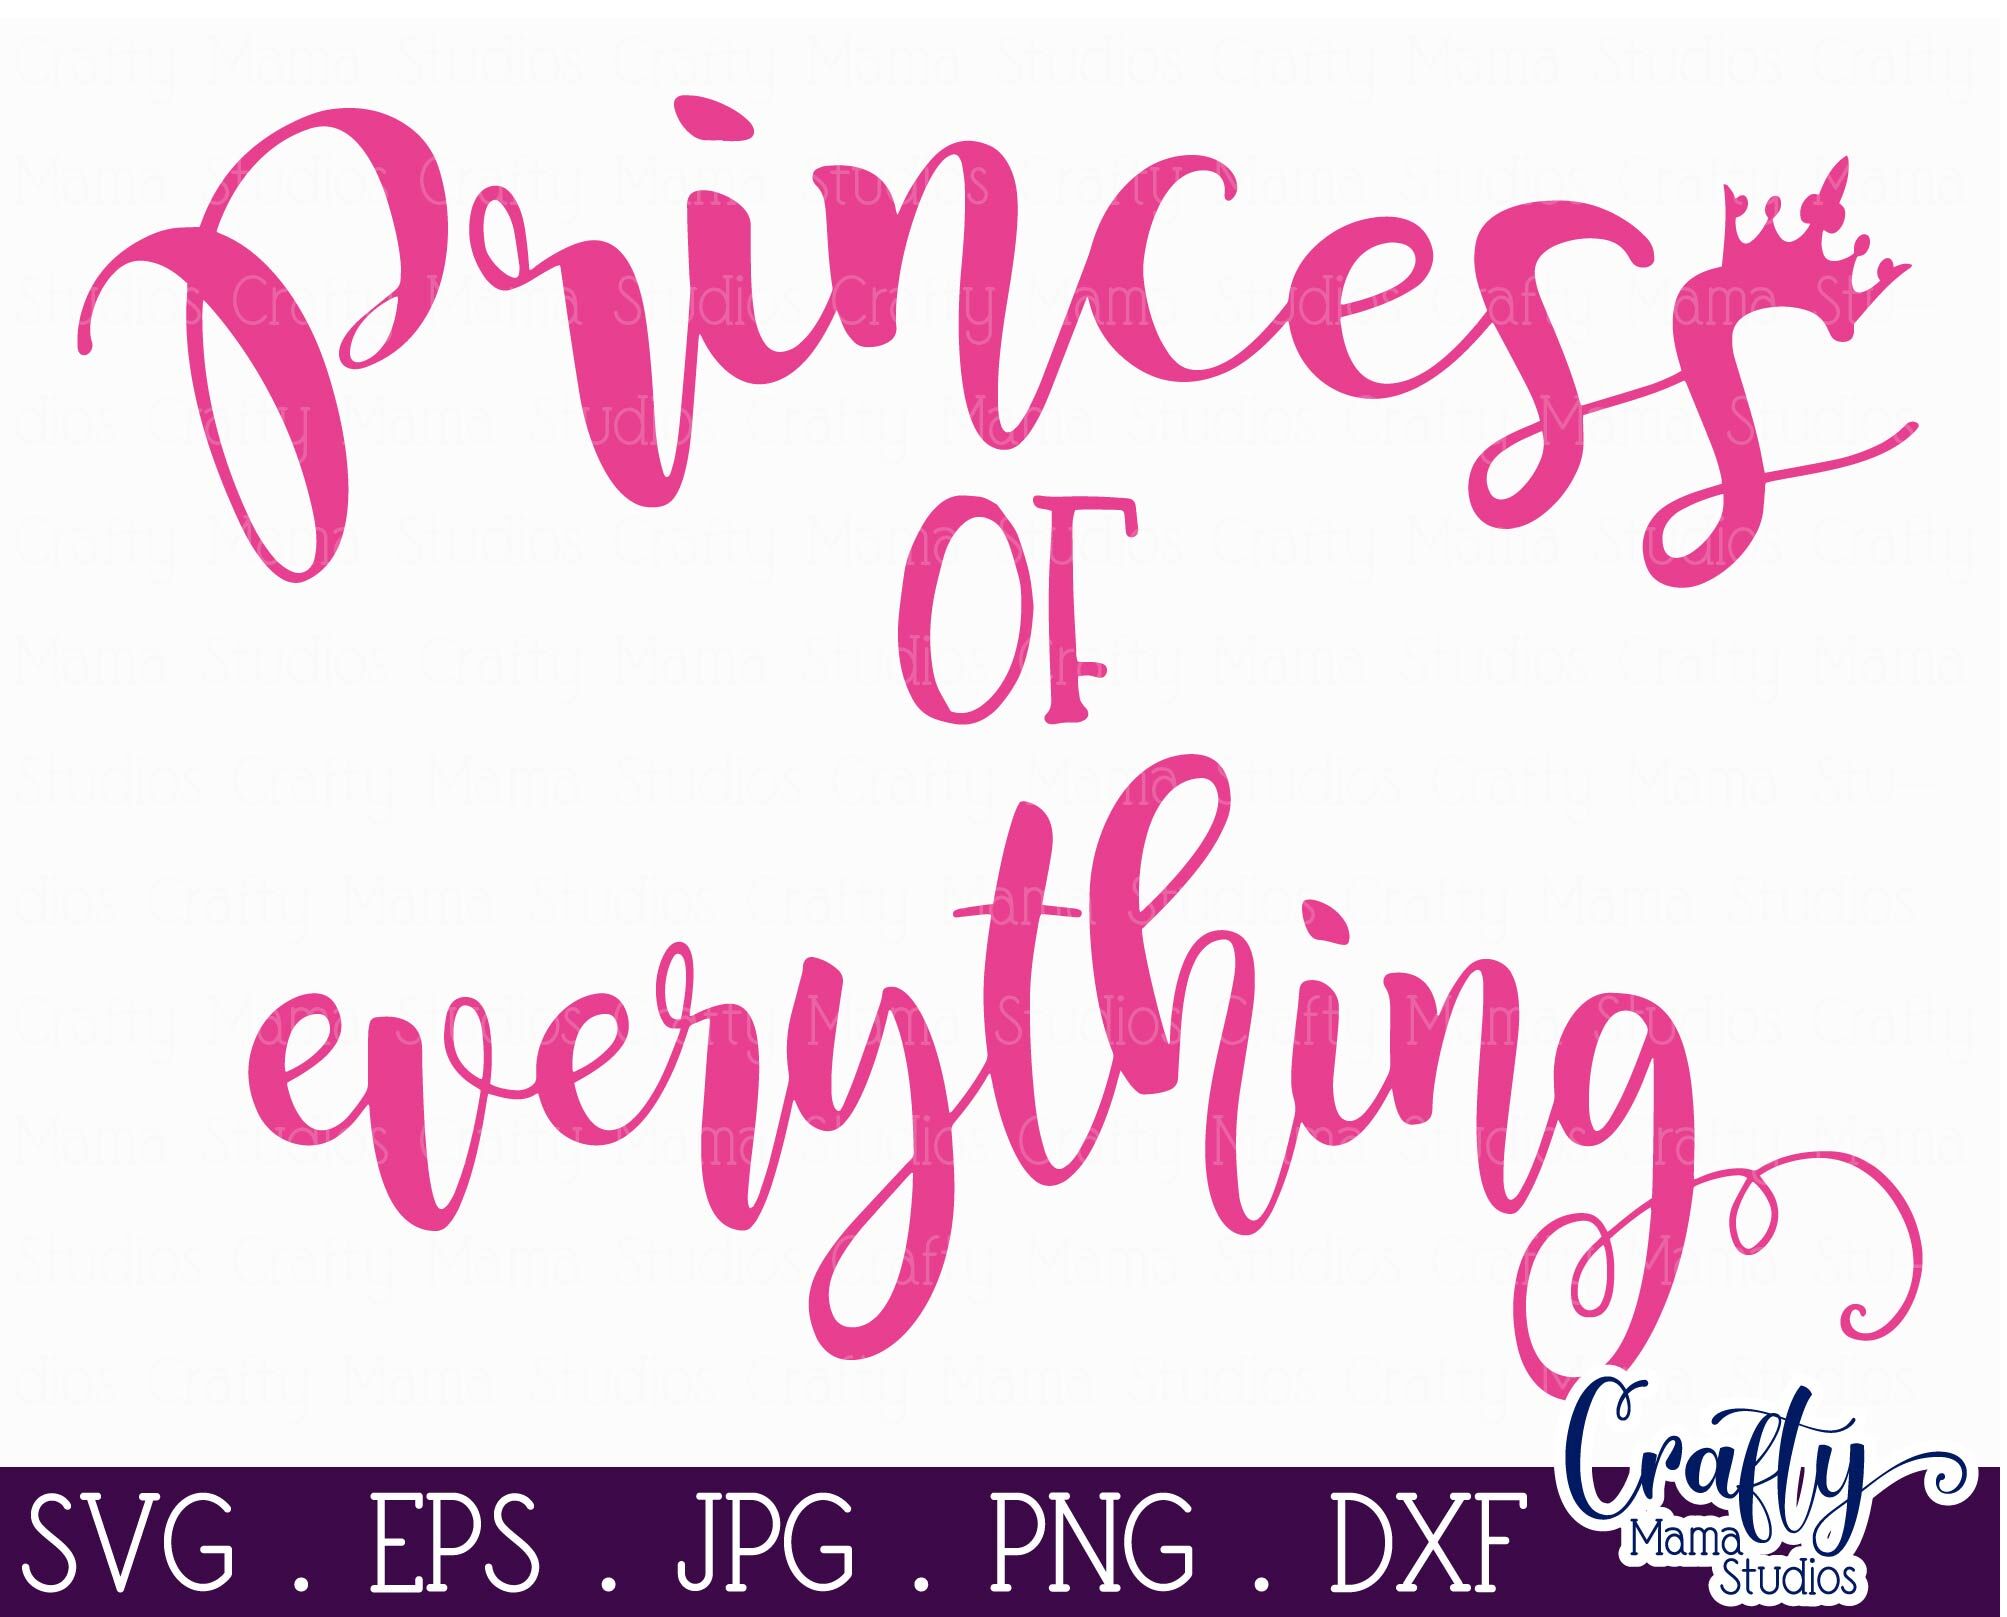 Princess Svg Girl Power Svg Princess Of Everything Svg By Crafty Mama Studios Thehungryjpeg Com